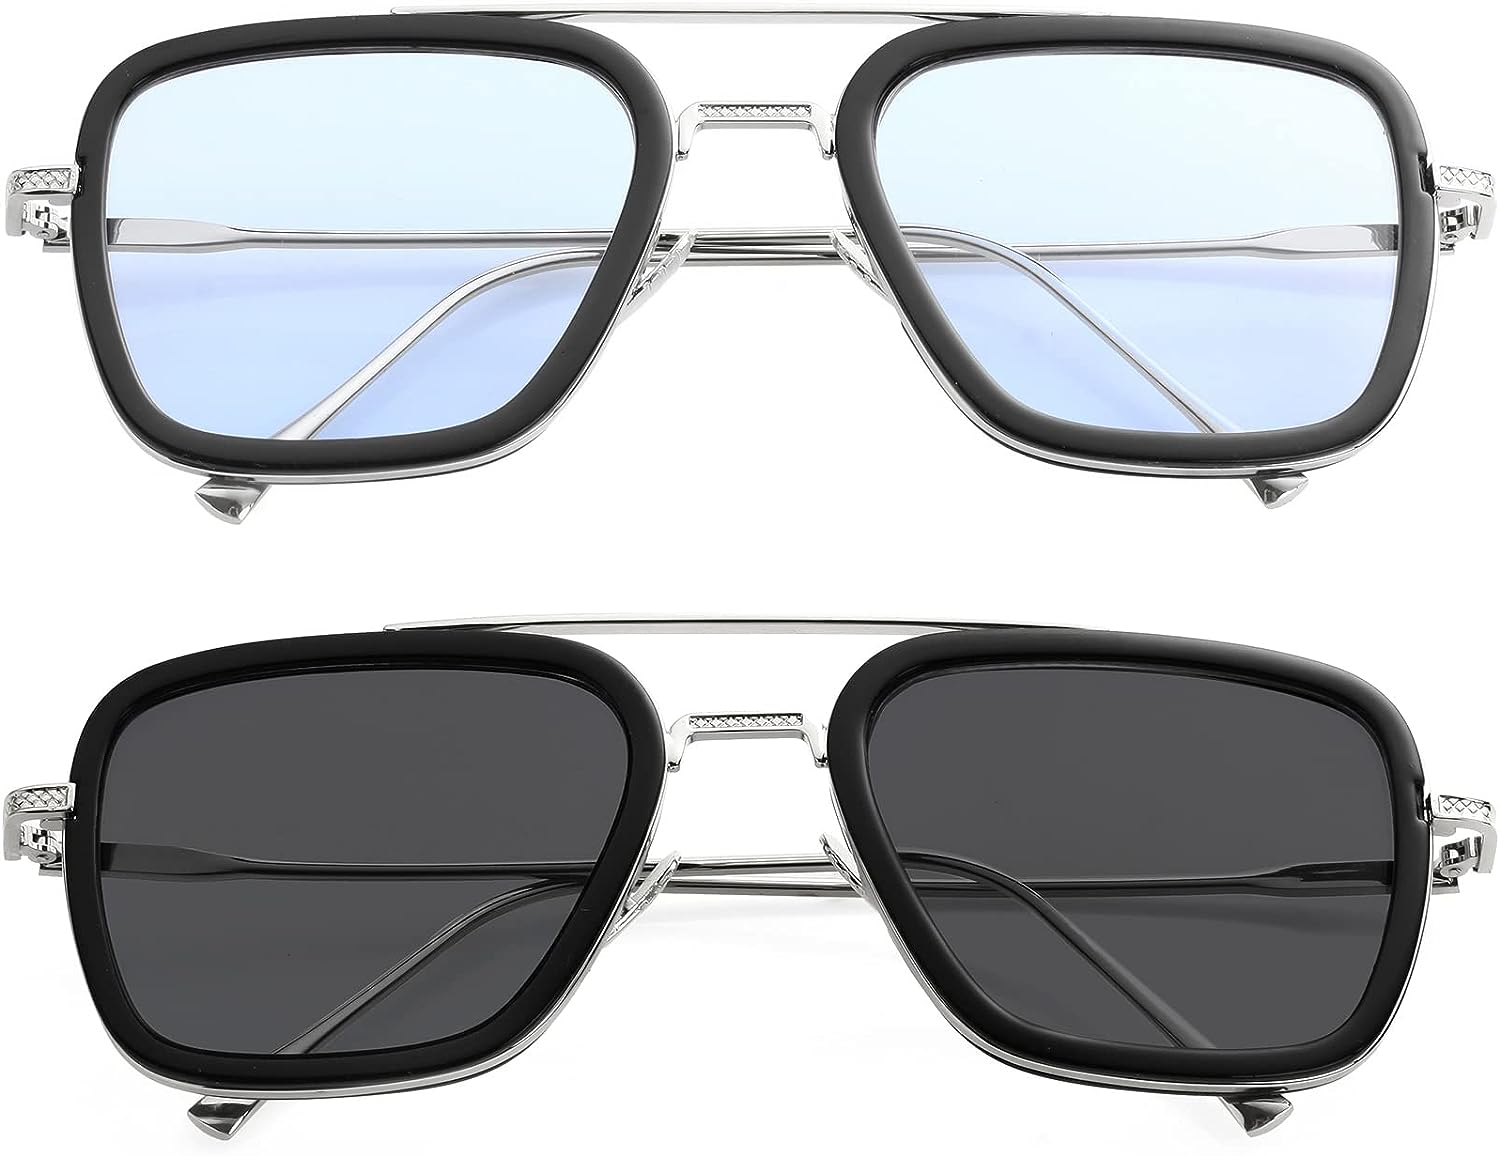 Buy Tony Stark Sunglasses Vintage Square Metal Frame Aviator